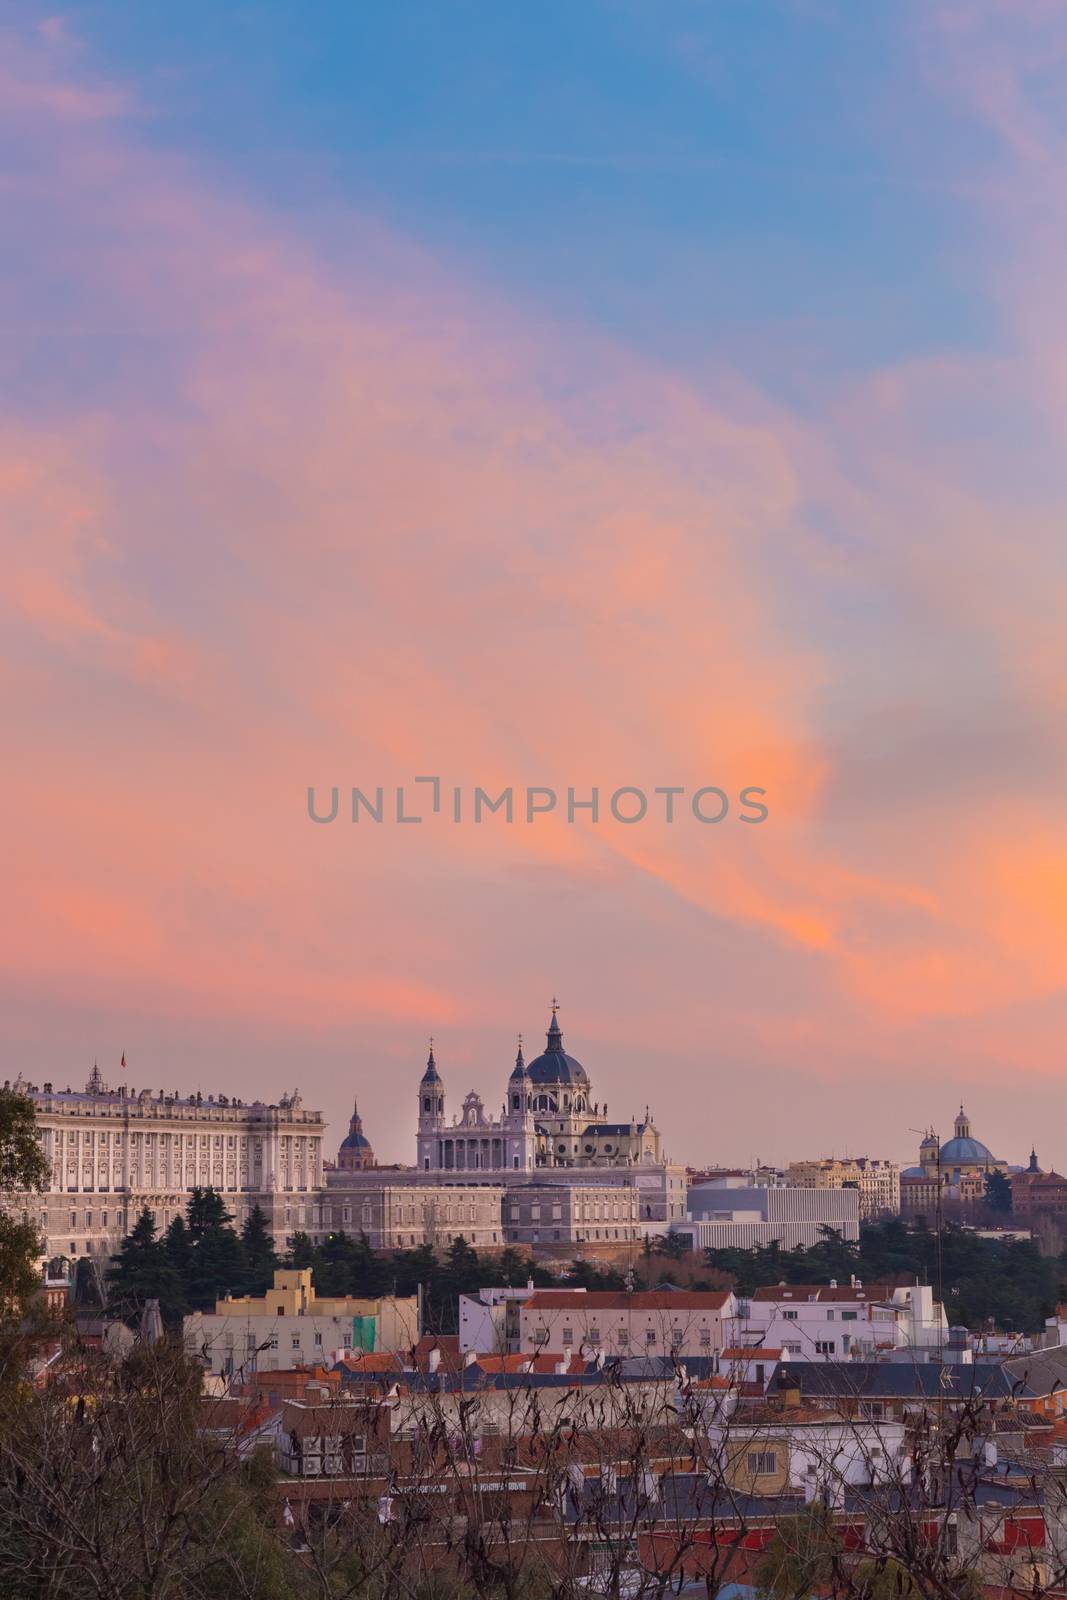 Madrid, Spain skyline at Santa Maria la Real de La Almudena Cathedral and the Royal Palace in vivid colorful sunset.